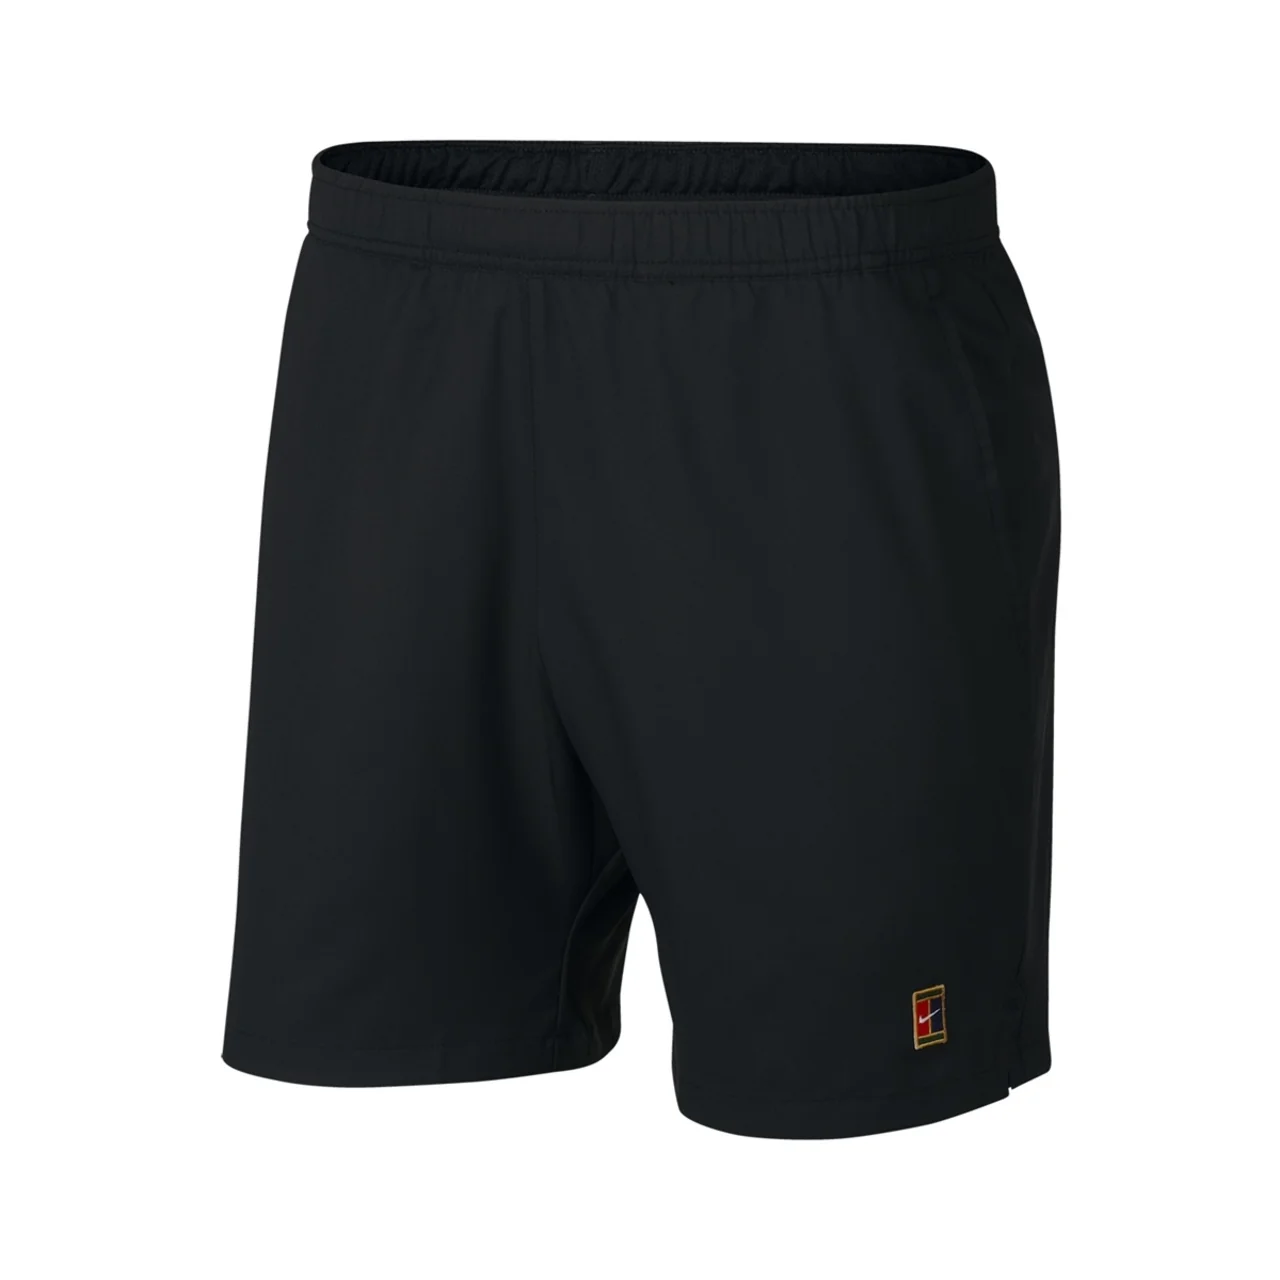 Nike Dry 8" Shorts Black/Tennis Logo